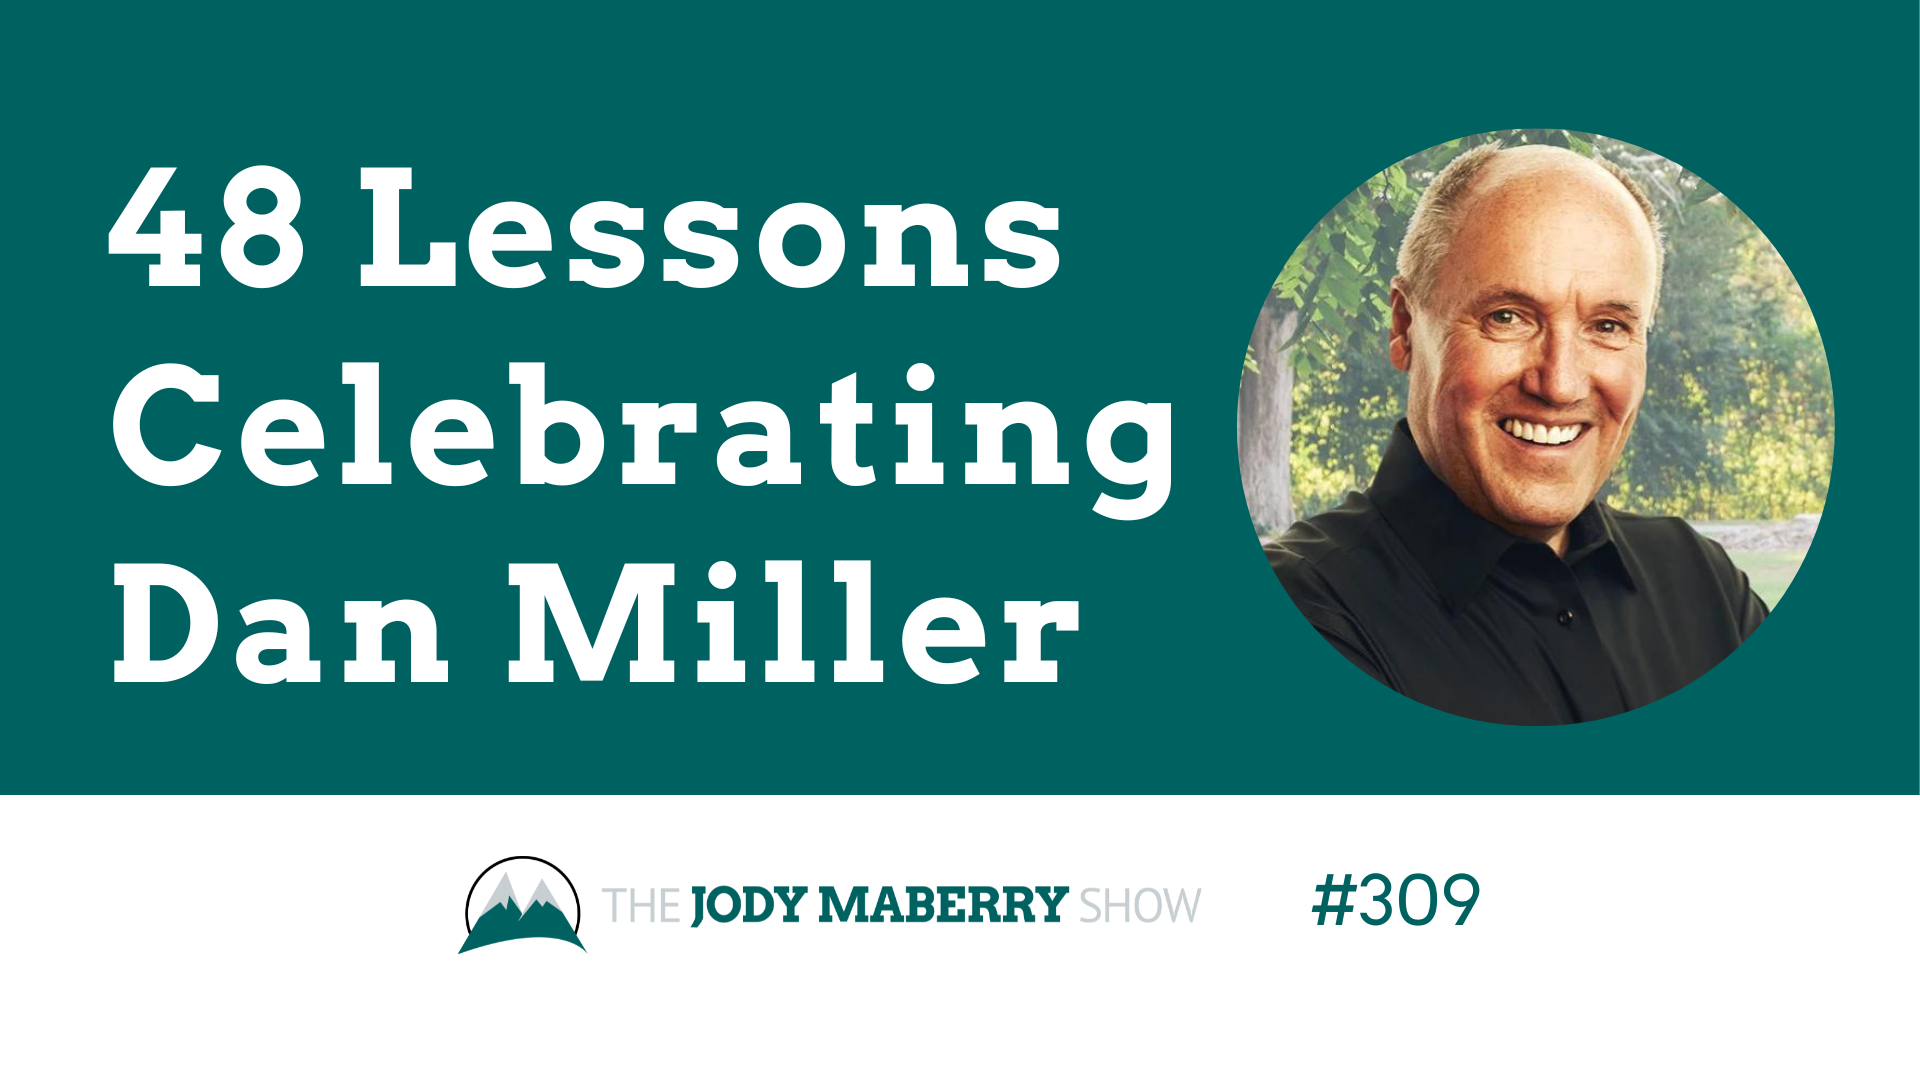 Jody Maberry Show Episode 309 48 lessons celebrating Dan Miller